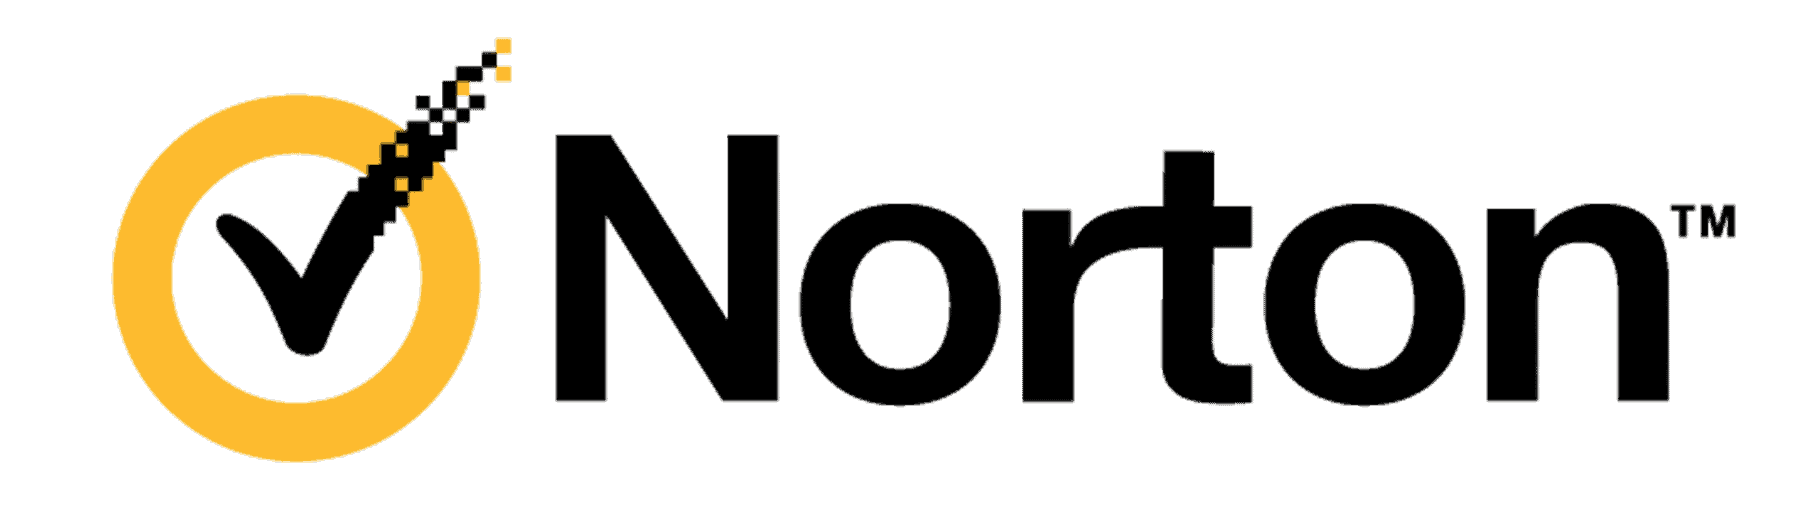 Norton logo - Product Logo